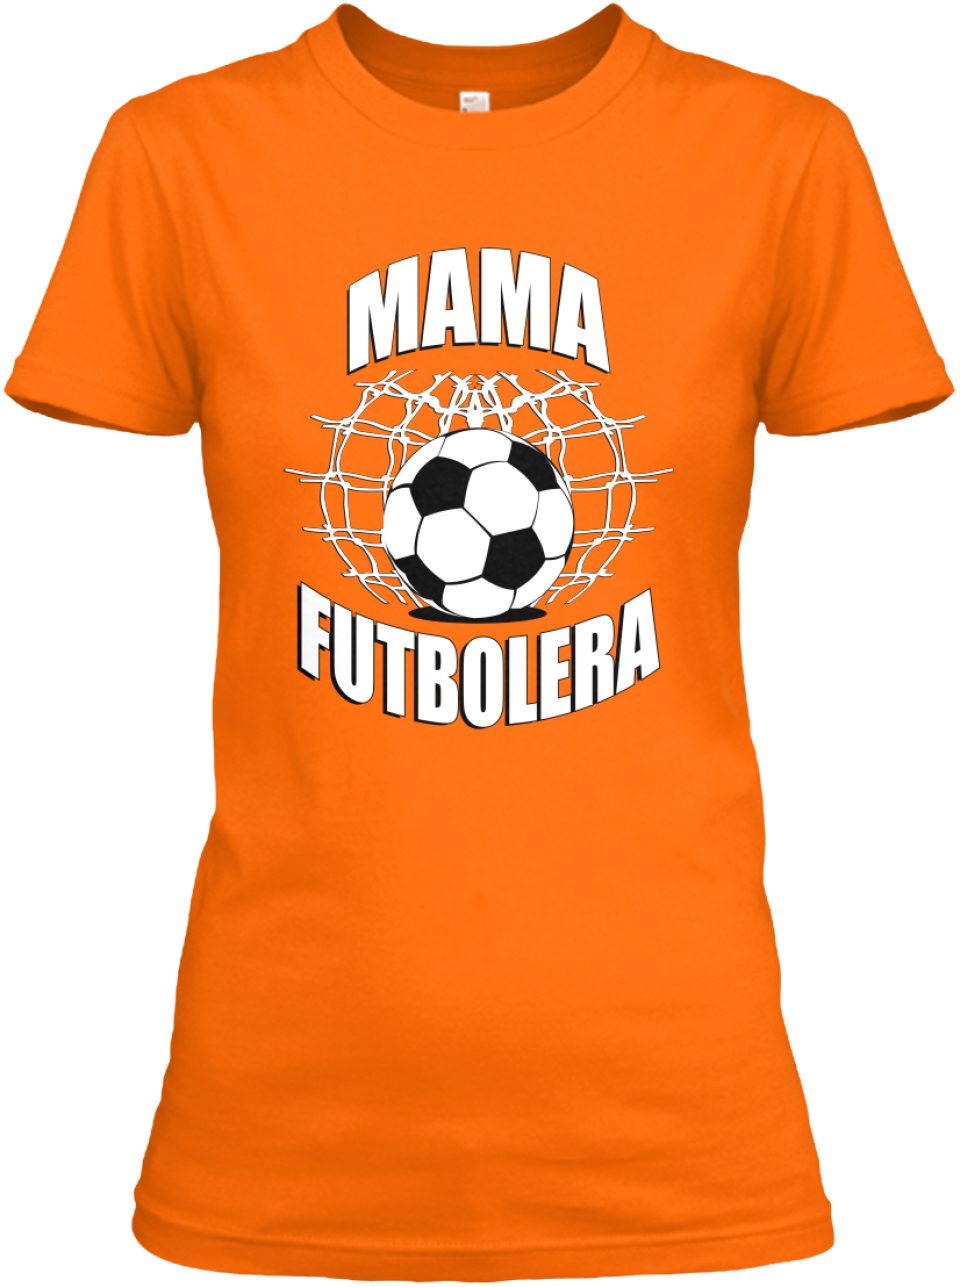 Mama Futbolera - MAMA FUTBOLERA Products from Camisetas de Futbol |  Teespring